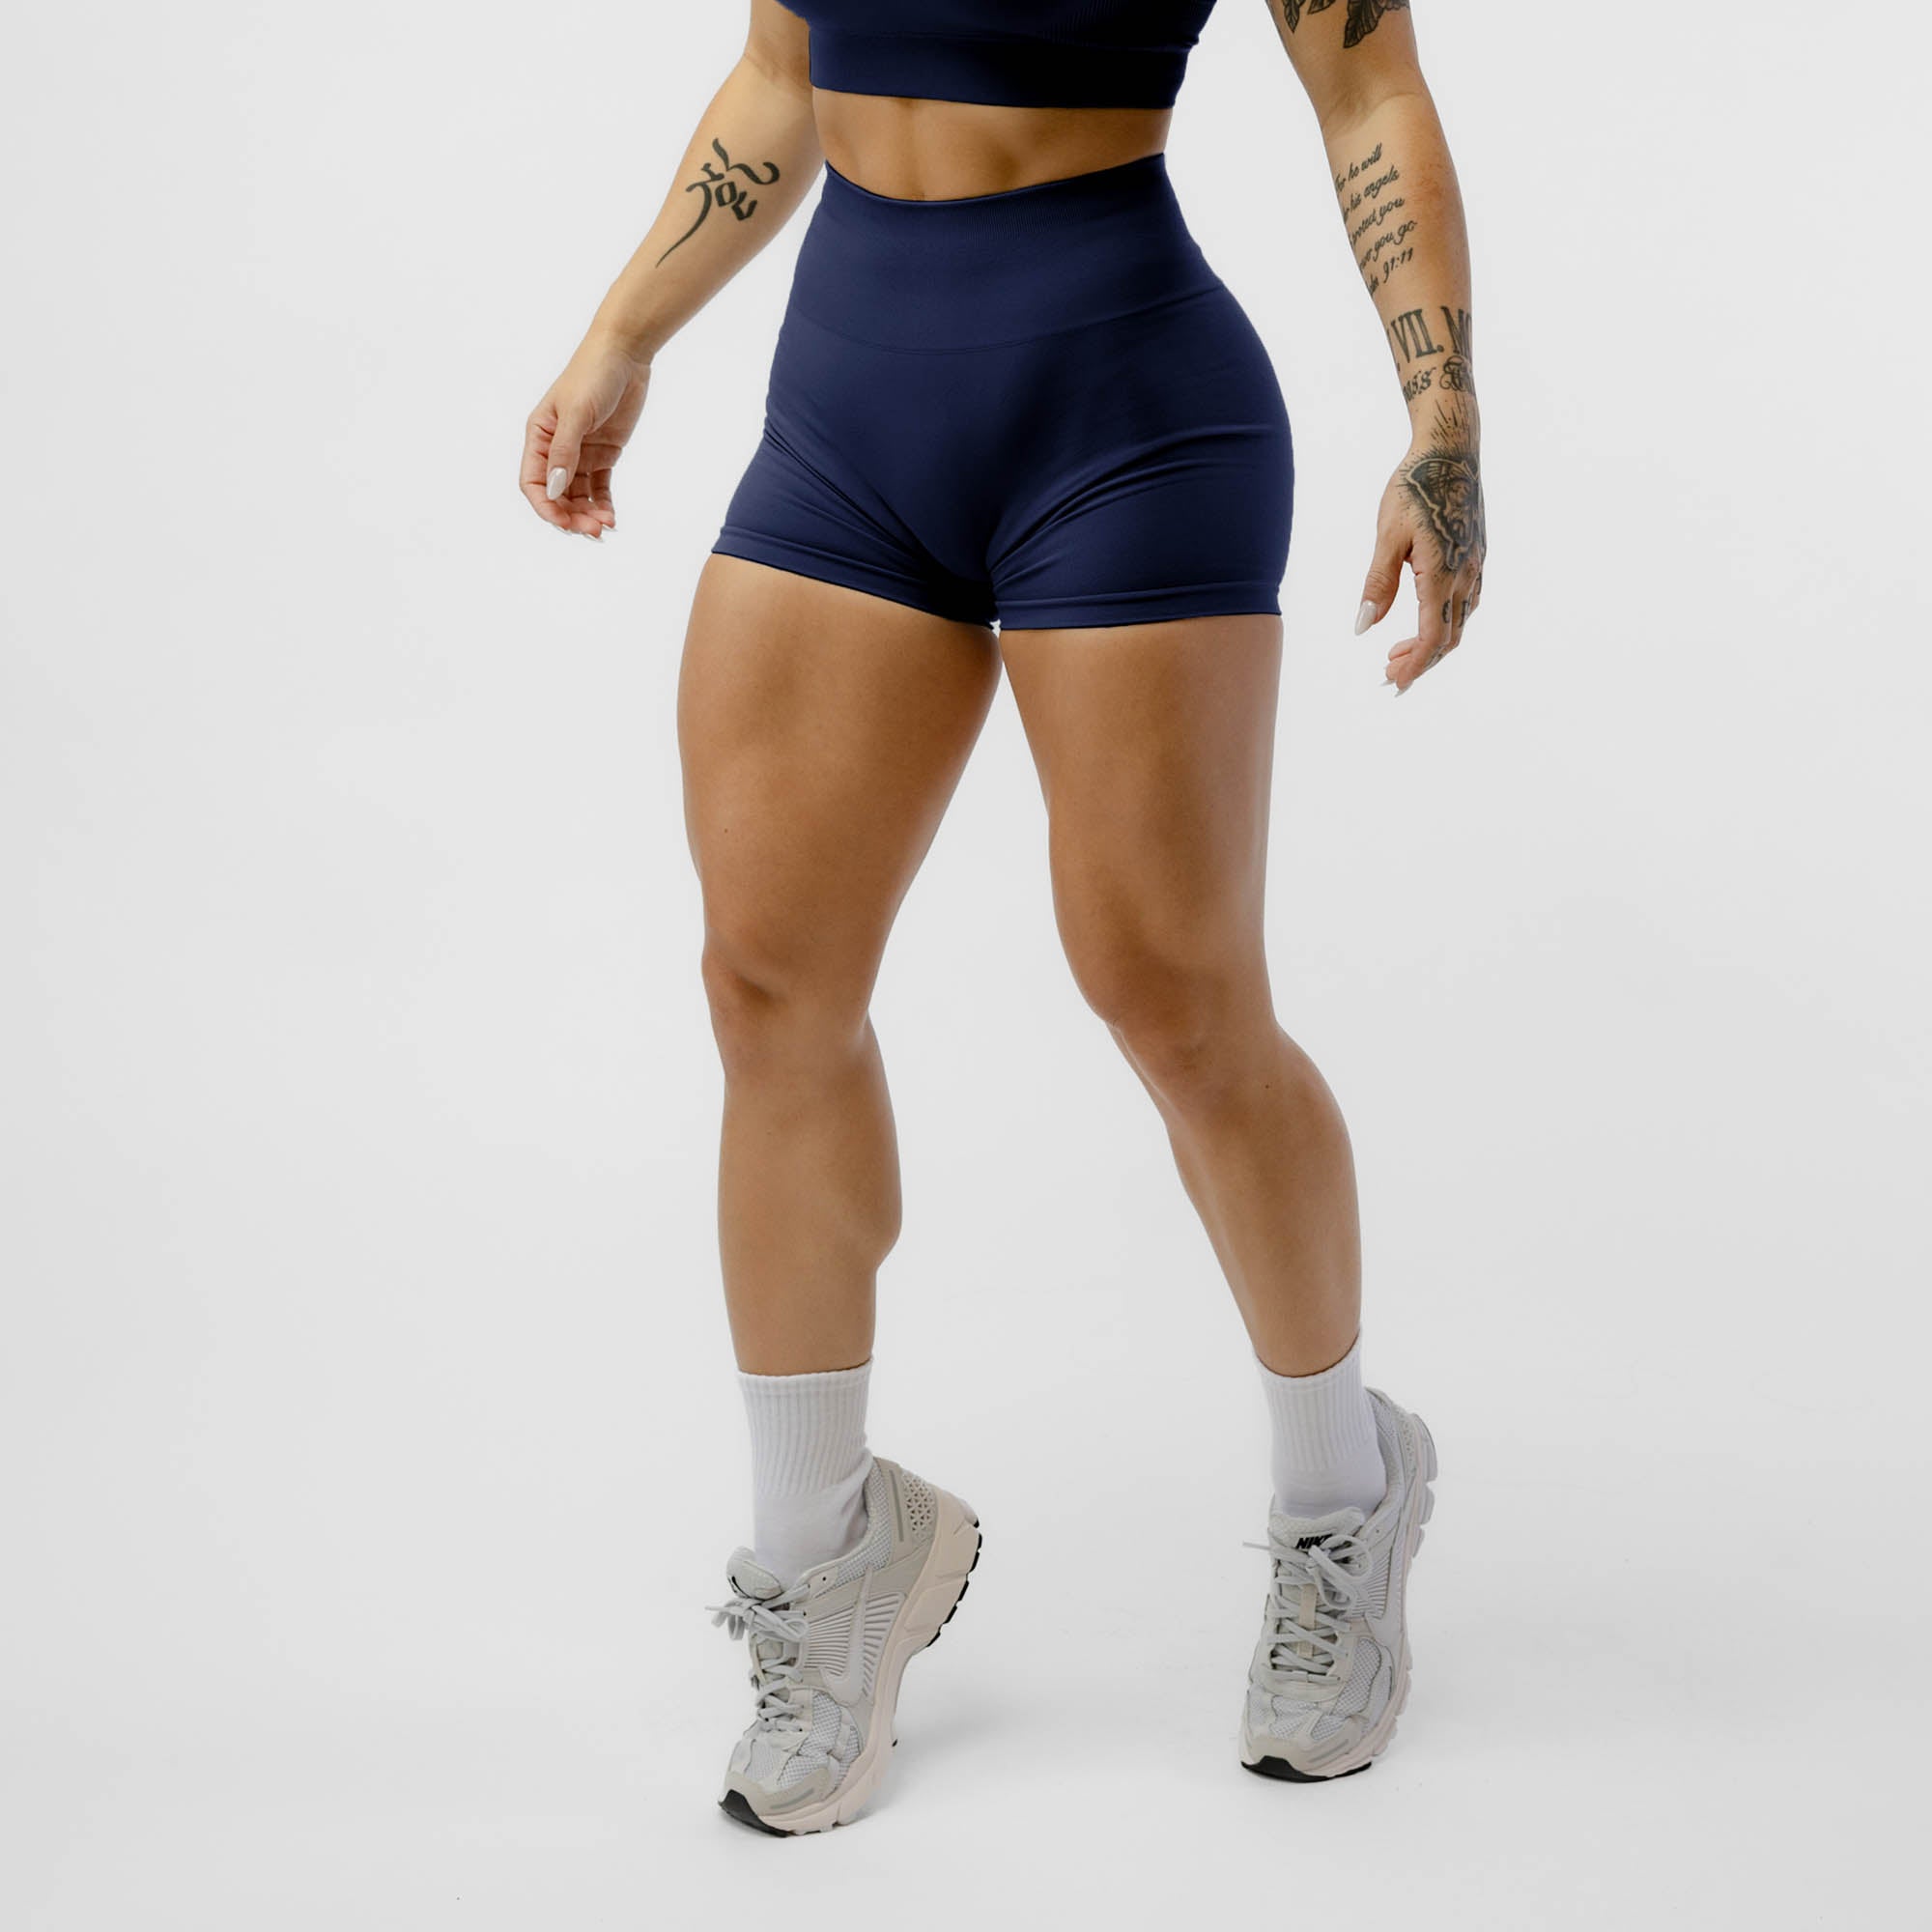 Kamo Fitness CozyTec Sweat Shorts Women High Waisted Lounge Comfy